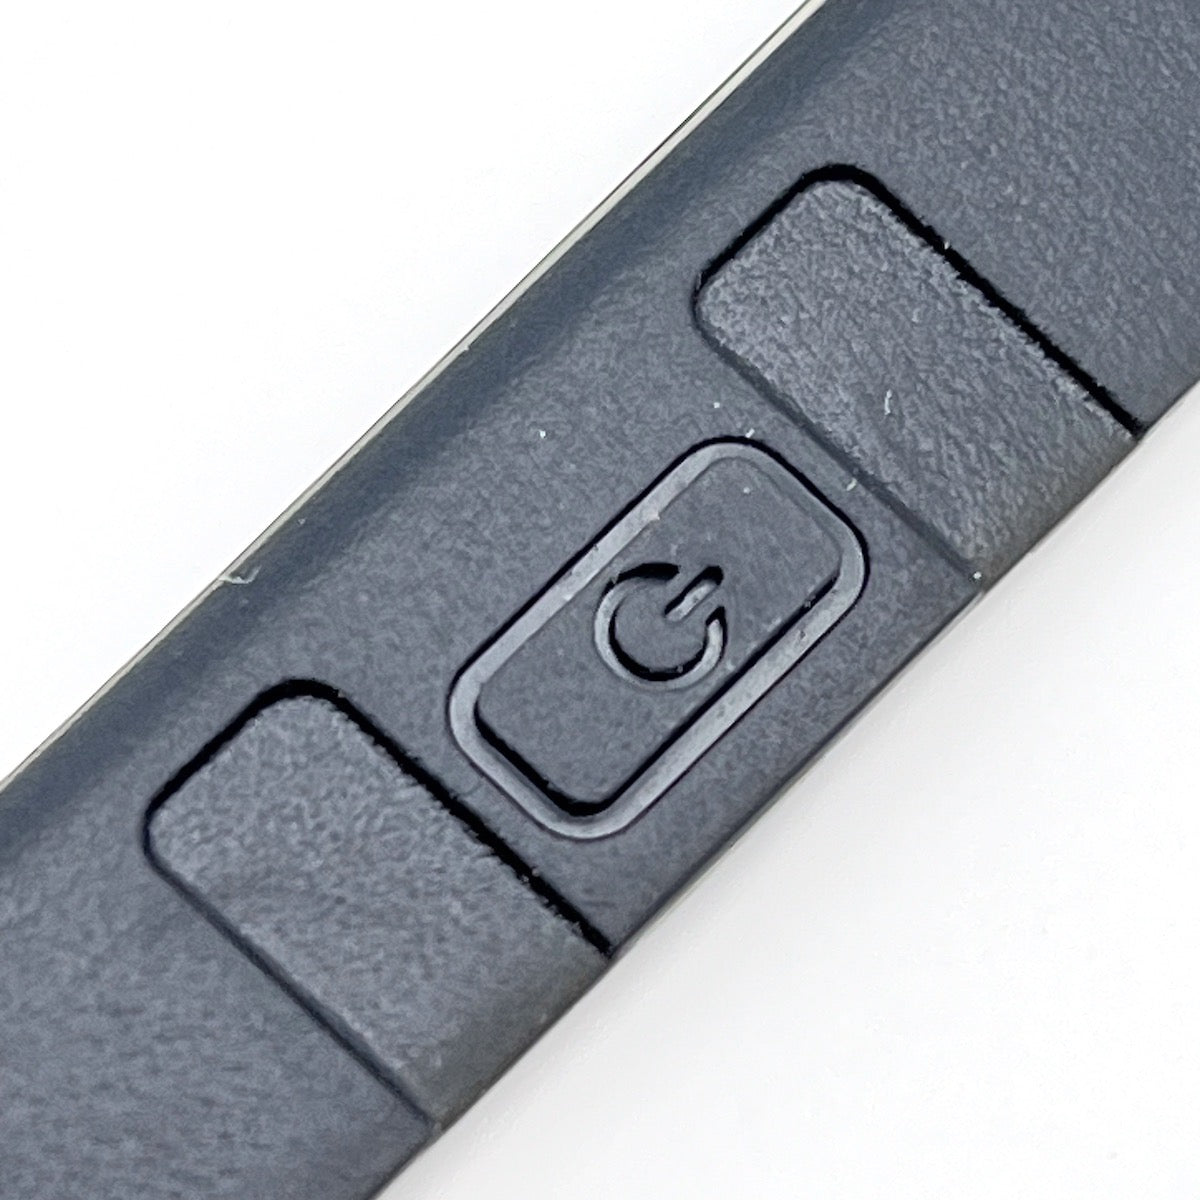 New Rubber power button for Garmin Alpha 100 Atemos 100 case repair part